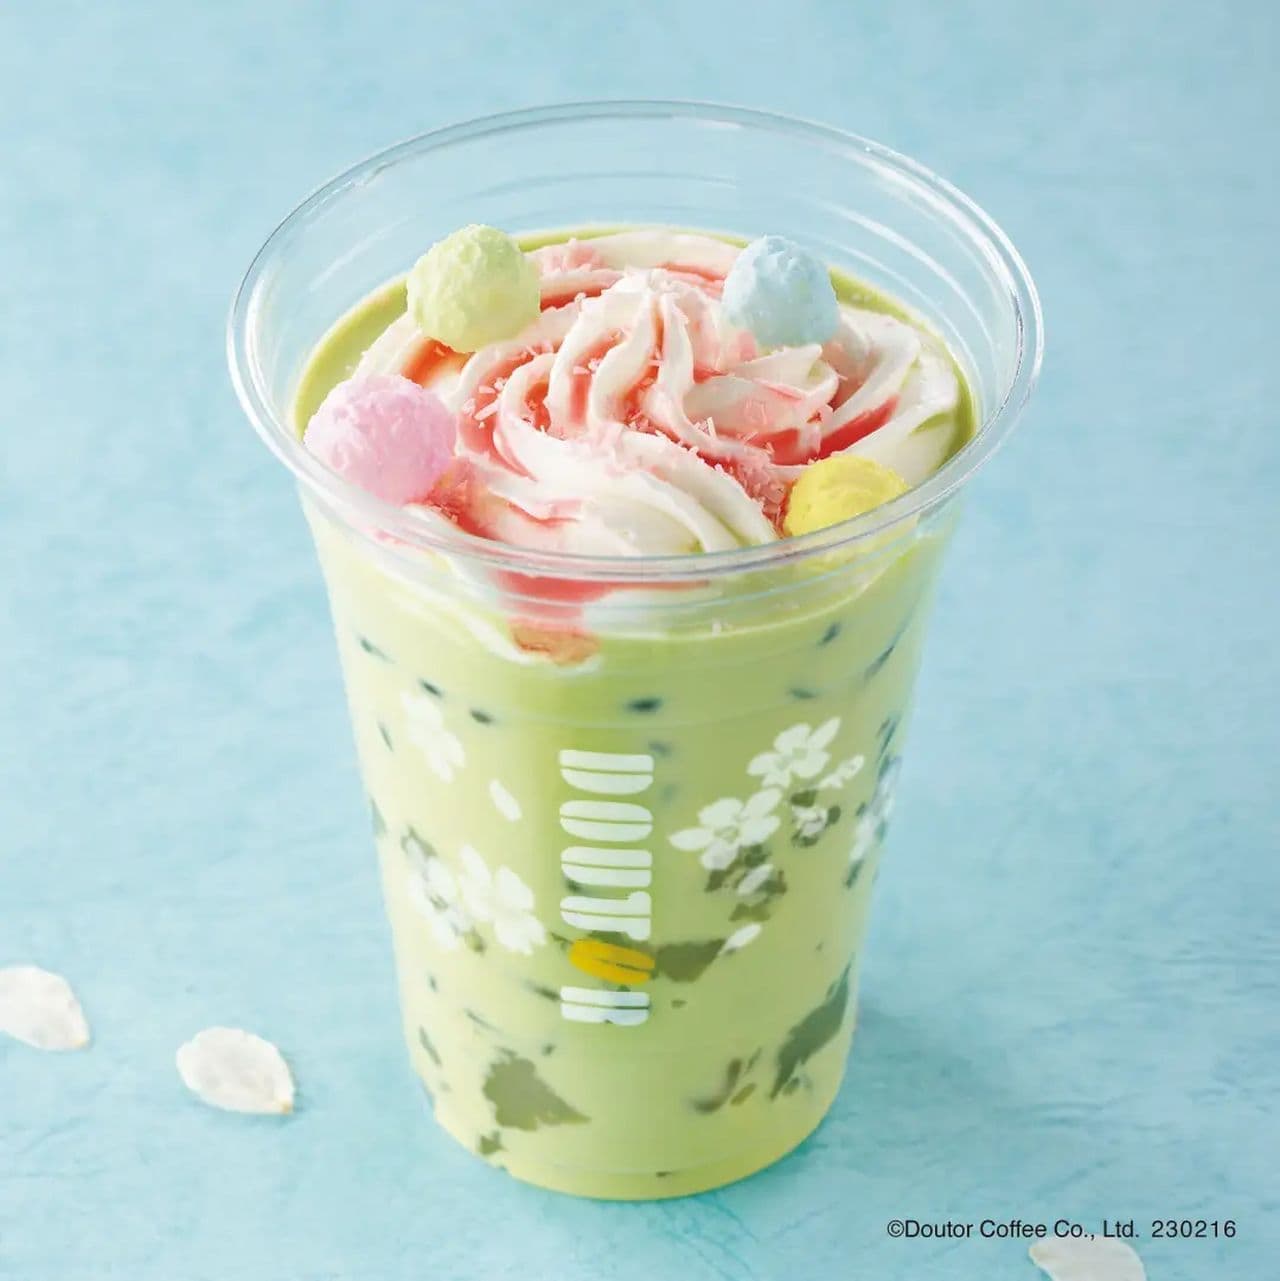 Doutor Coffee Shop "Sakura Green Tea au Lait - Warabimochi - (Iced)